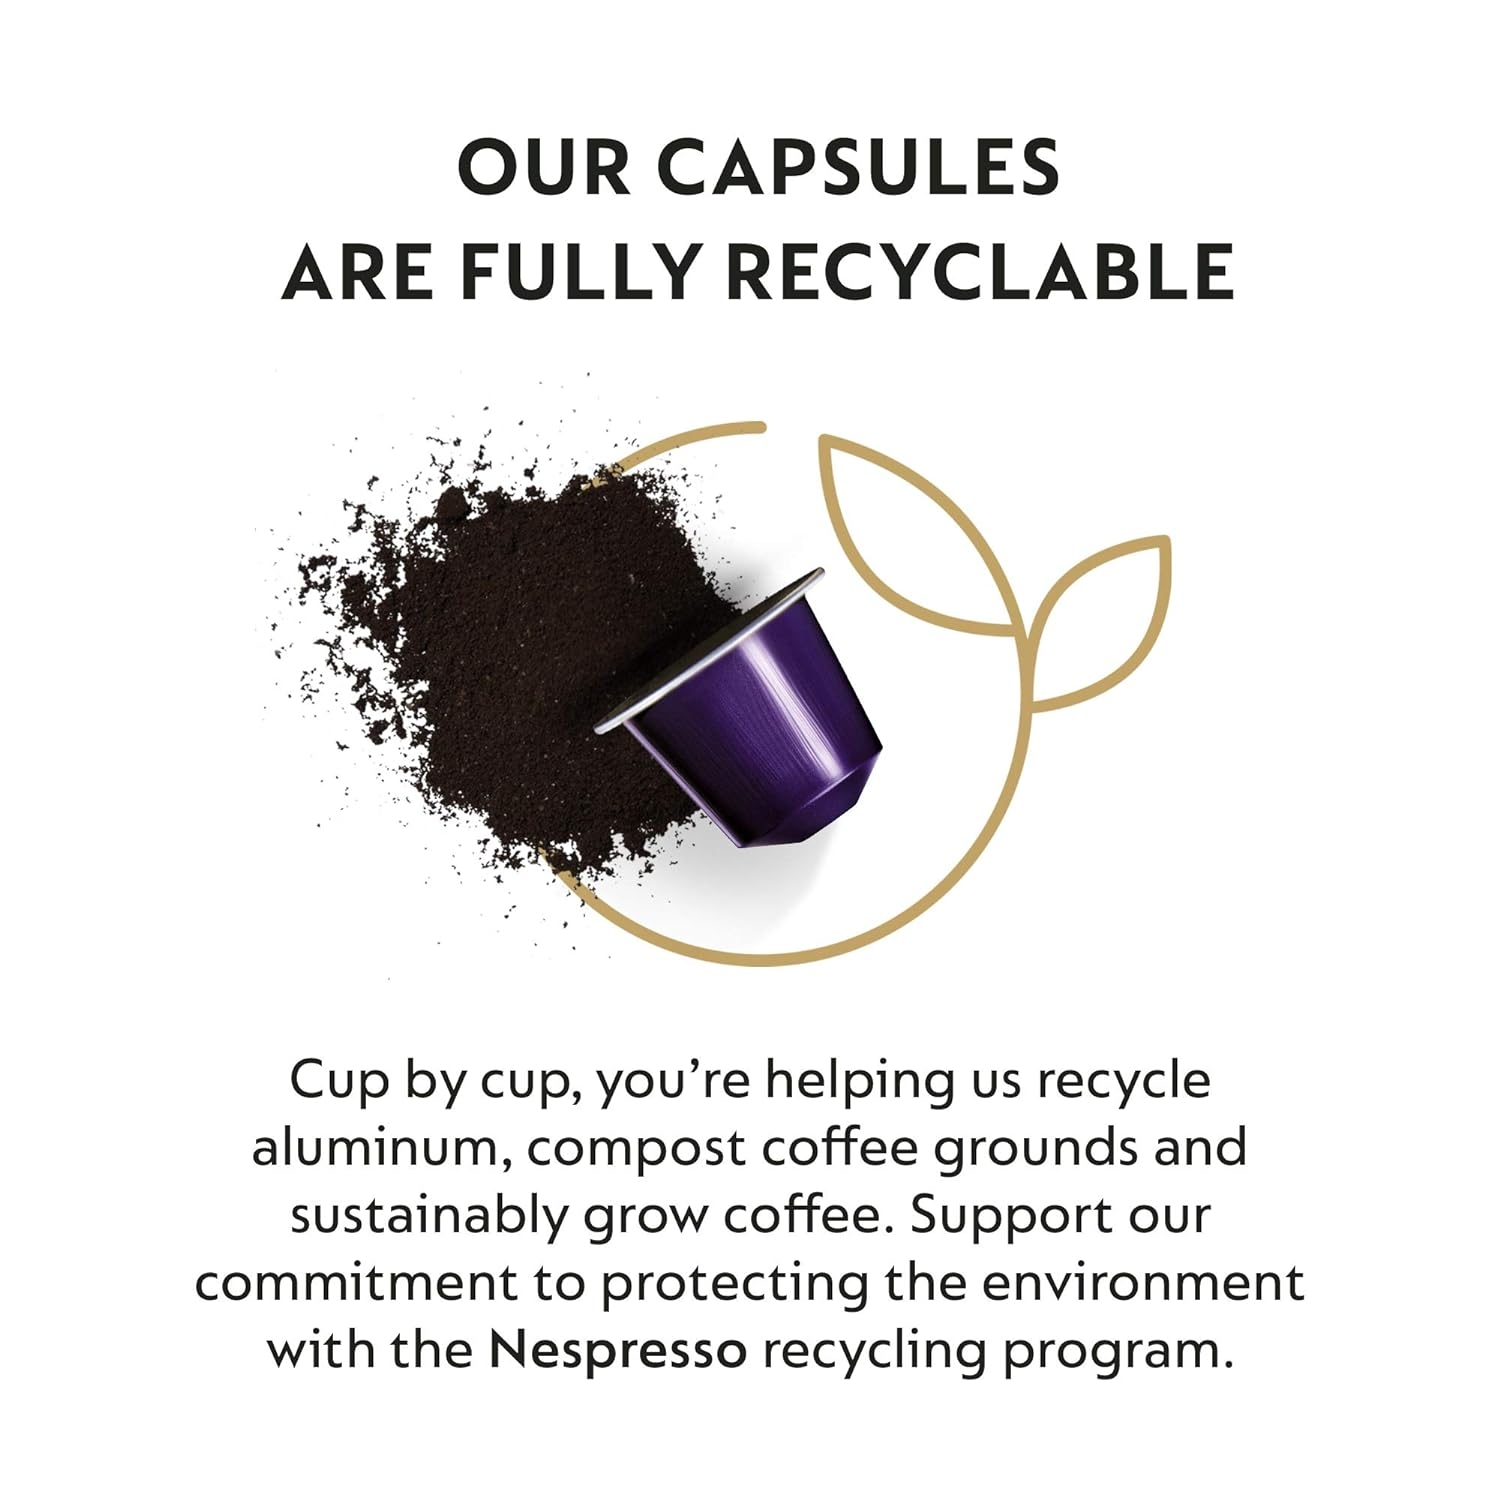 Nespresso OriginalLine Variety Pack Capsules, 50 Count Espresso Pods, Assorted Dark and Medium Roasts, 5 Coffee Flavors Include Roma, Capriccio, Livanto, Arpeggio & Ristretto